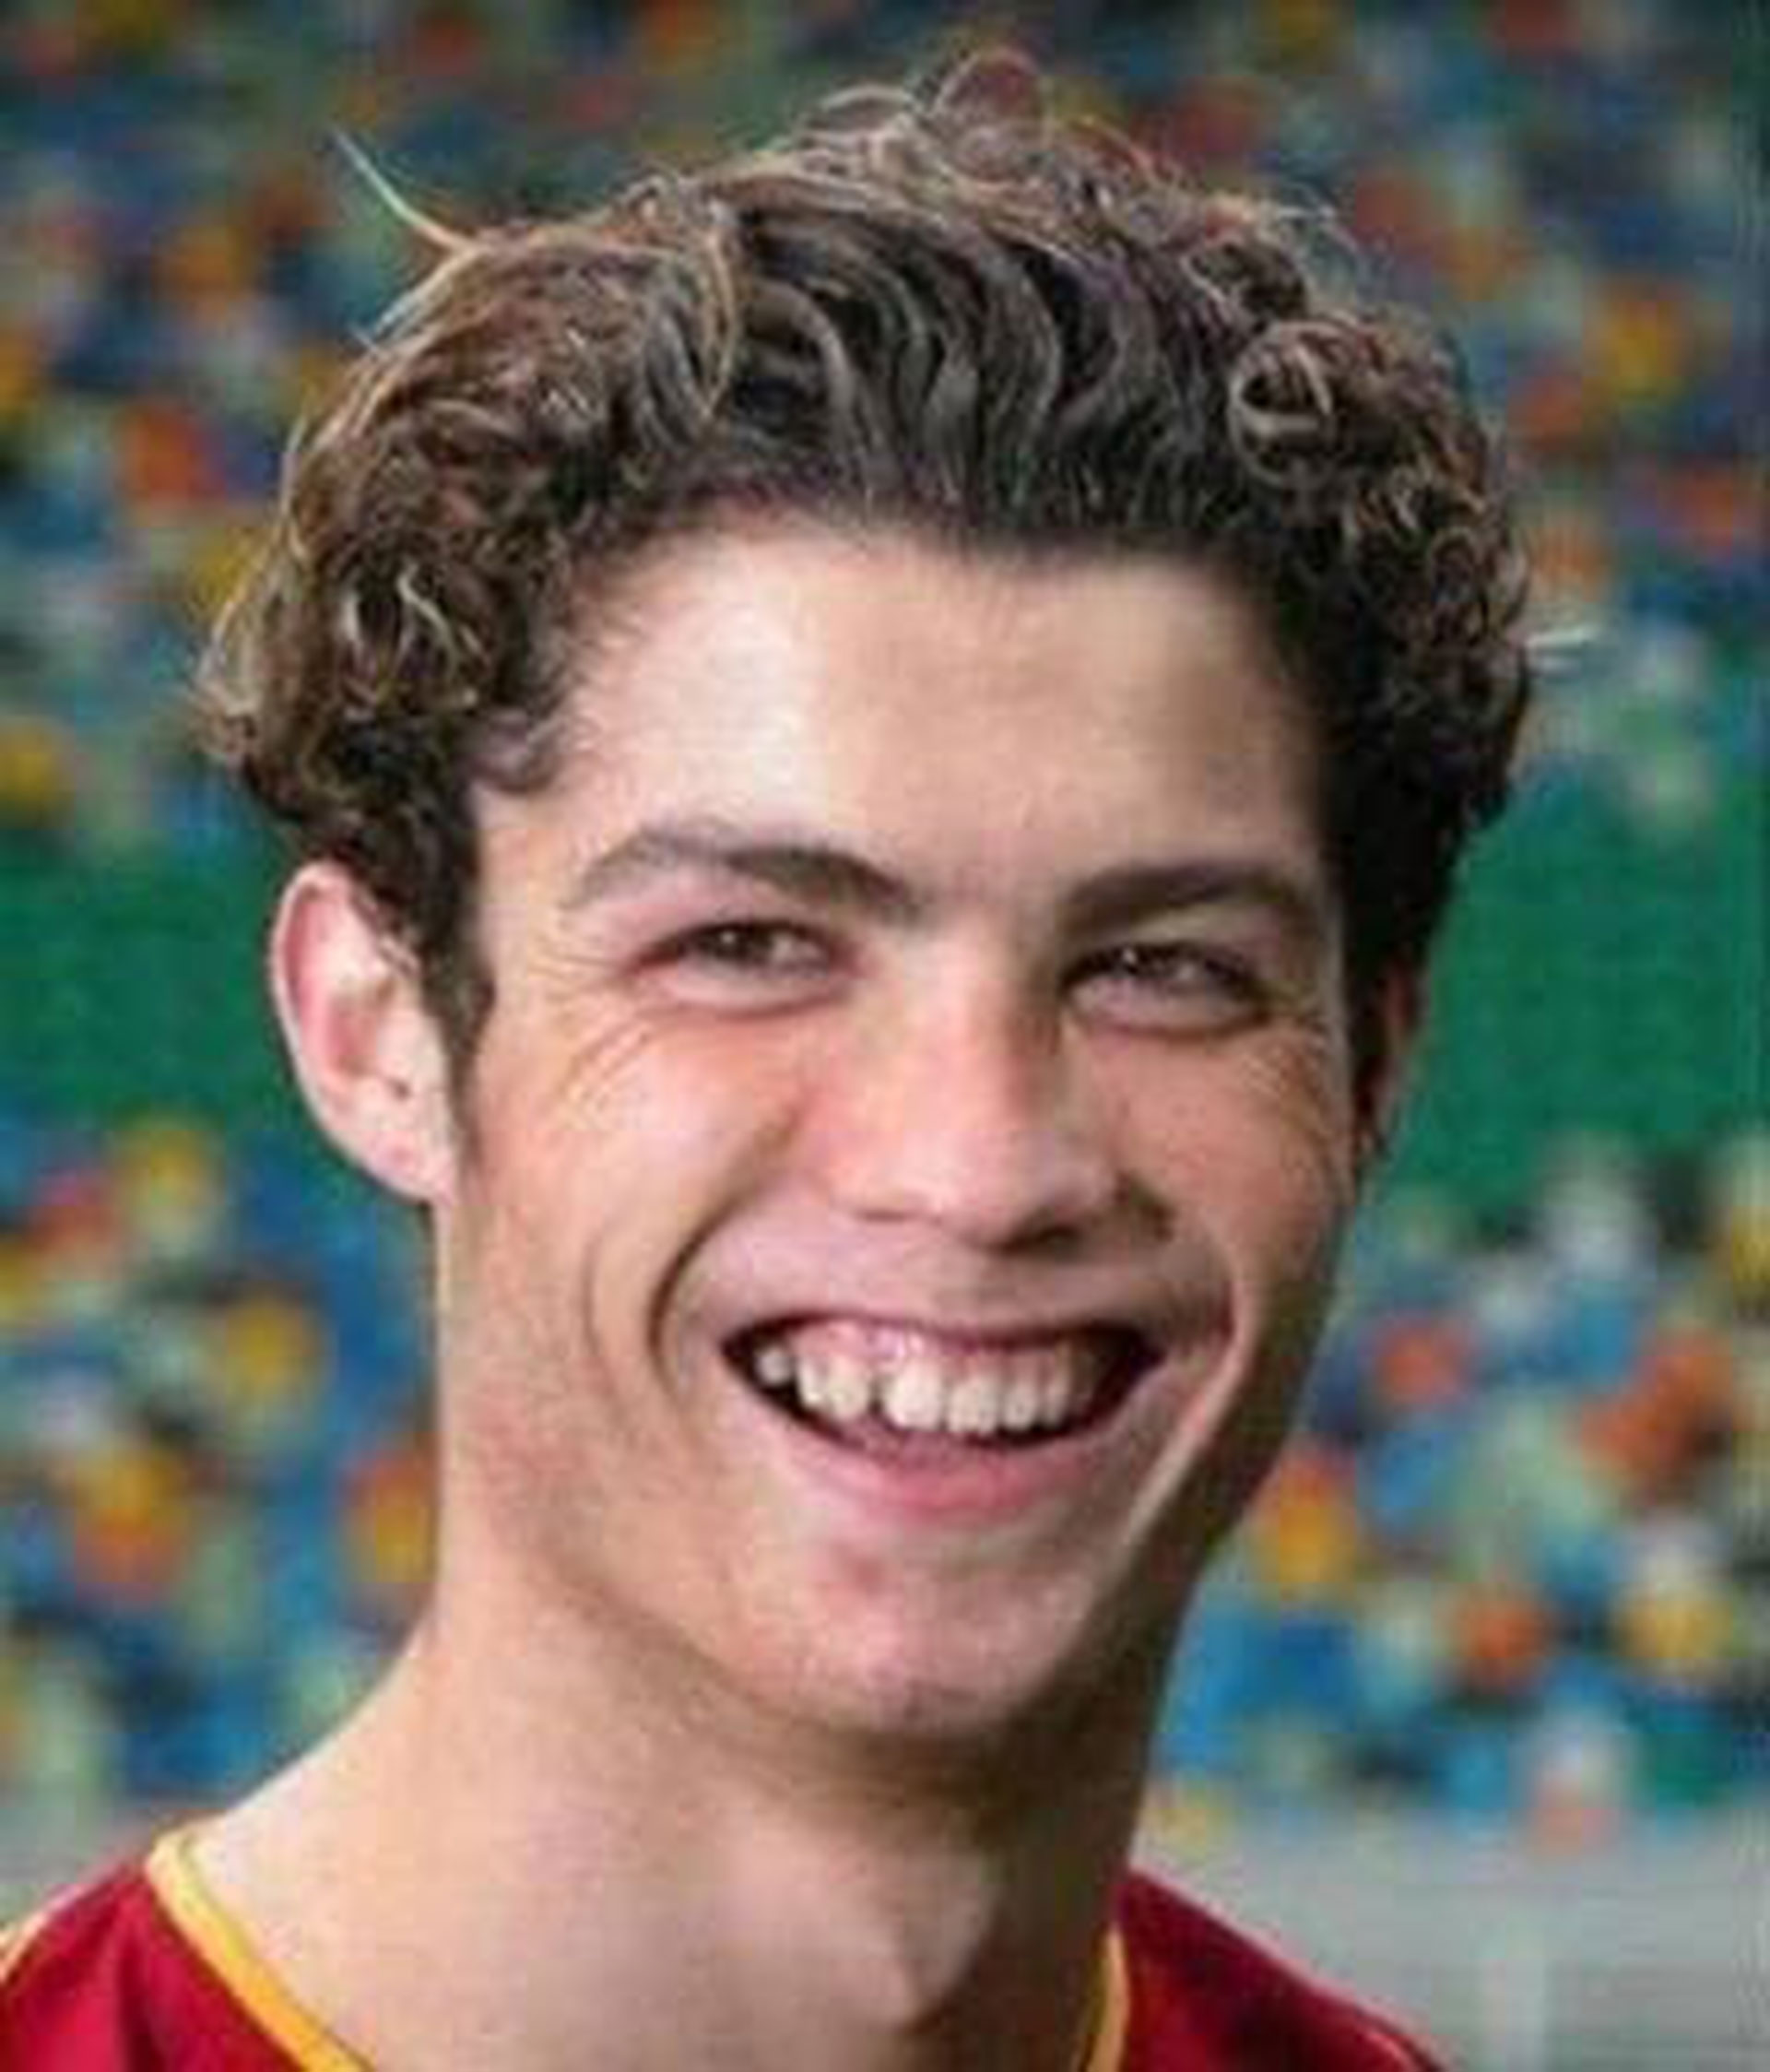 Роналду в молодости фото с кривыми зубами